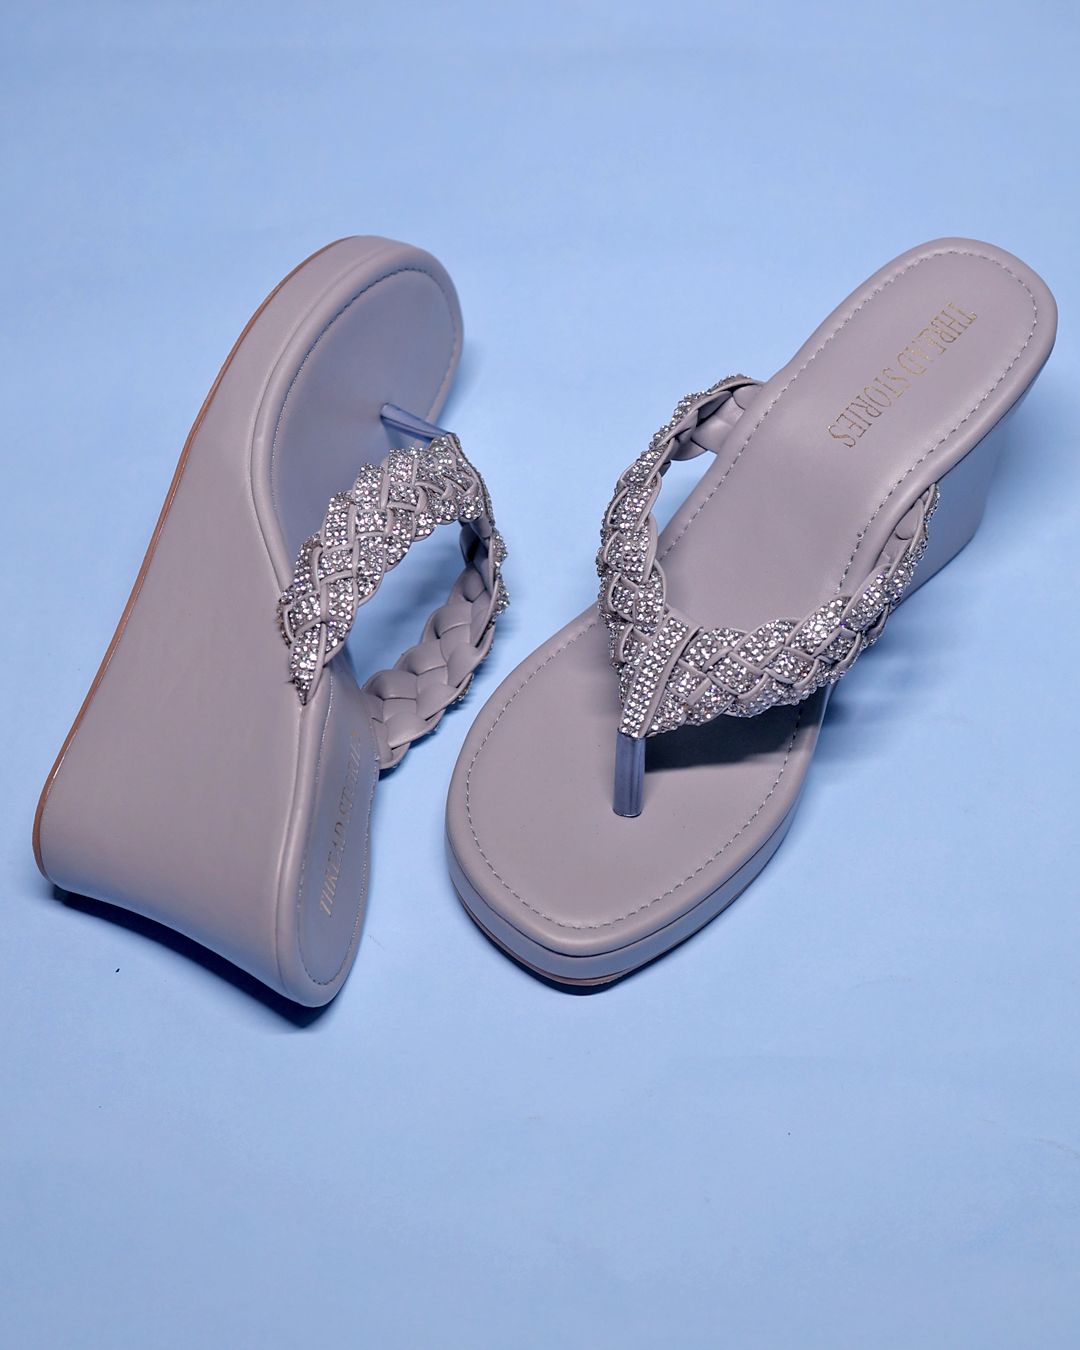 Buy Heels online at best prices in India - Amazon.in